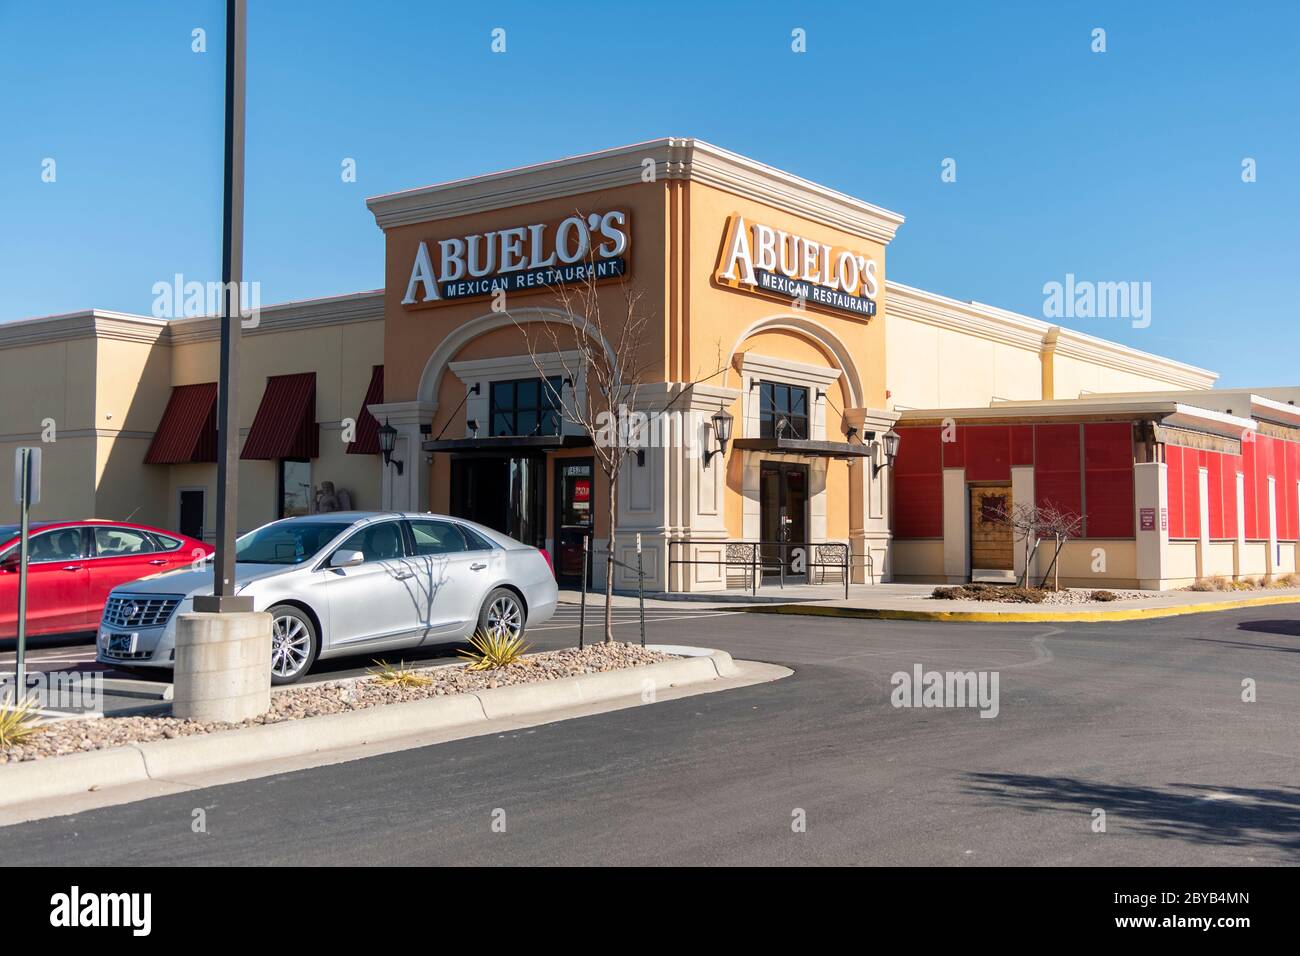 Abuelo's Mexican restaurant exterior in Wichita, Kansas, USA. Stock Photo